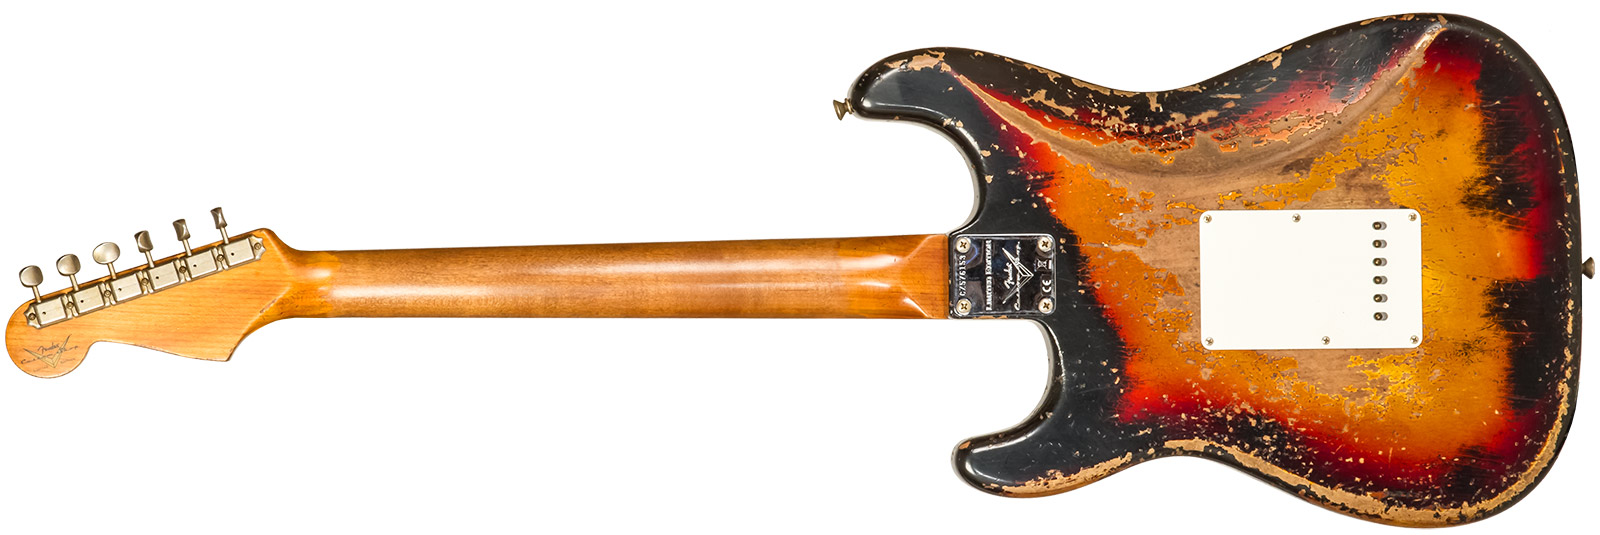 Fender Custom Shop Strat 1961 3s Trem Rw #cz576153 - Super Heavy Relic Black O. 3-color Sunburst - Guitare Électrique Forme Str - Variation 1